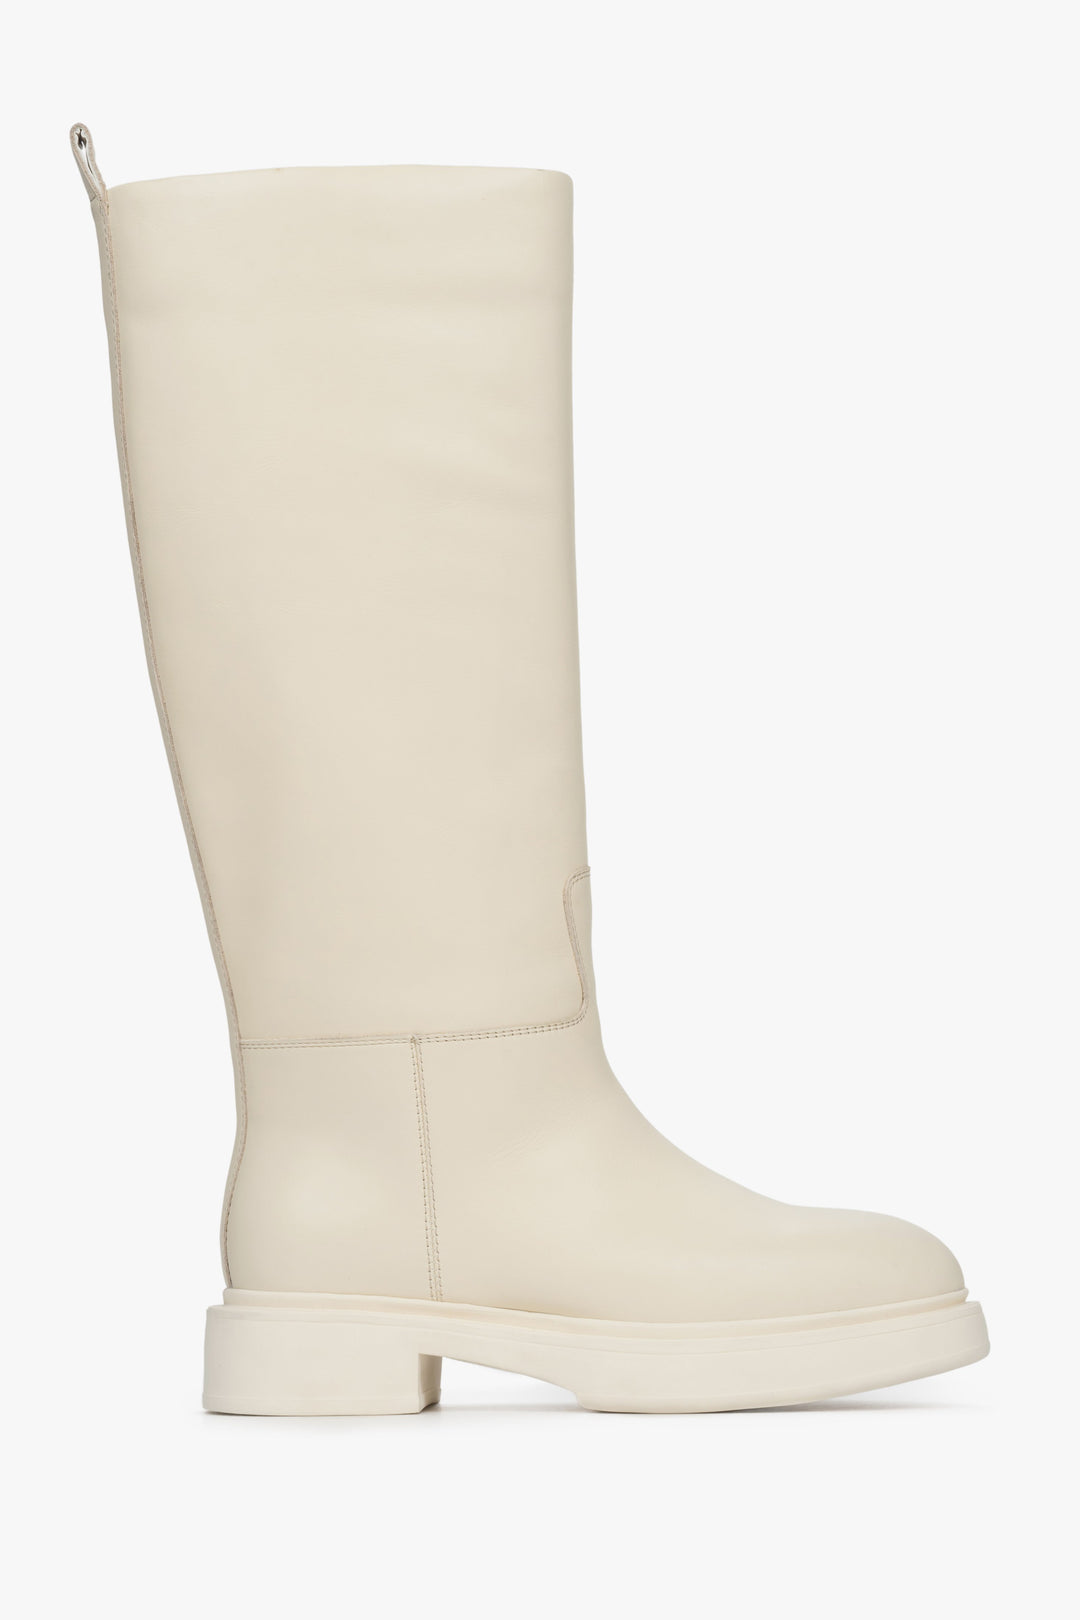 Women's beige leather winter boots by Estro - shoe profile.